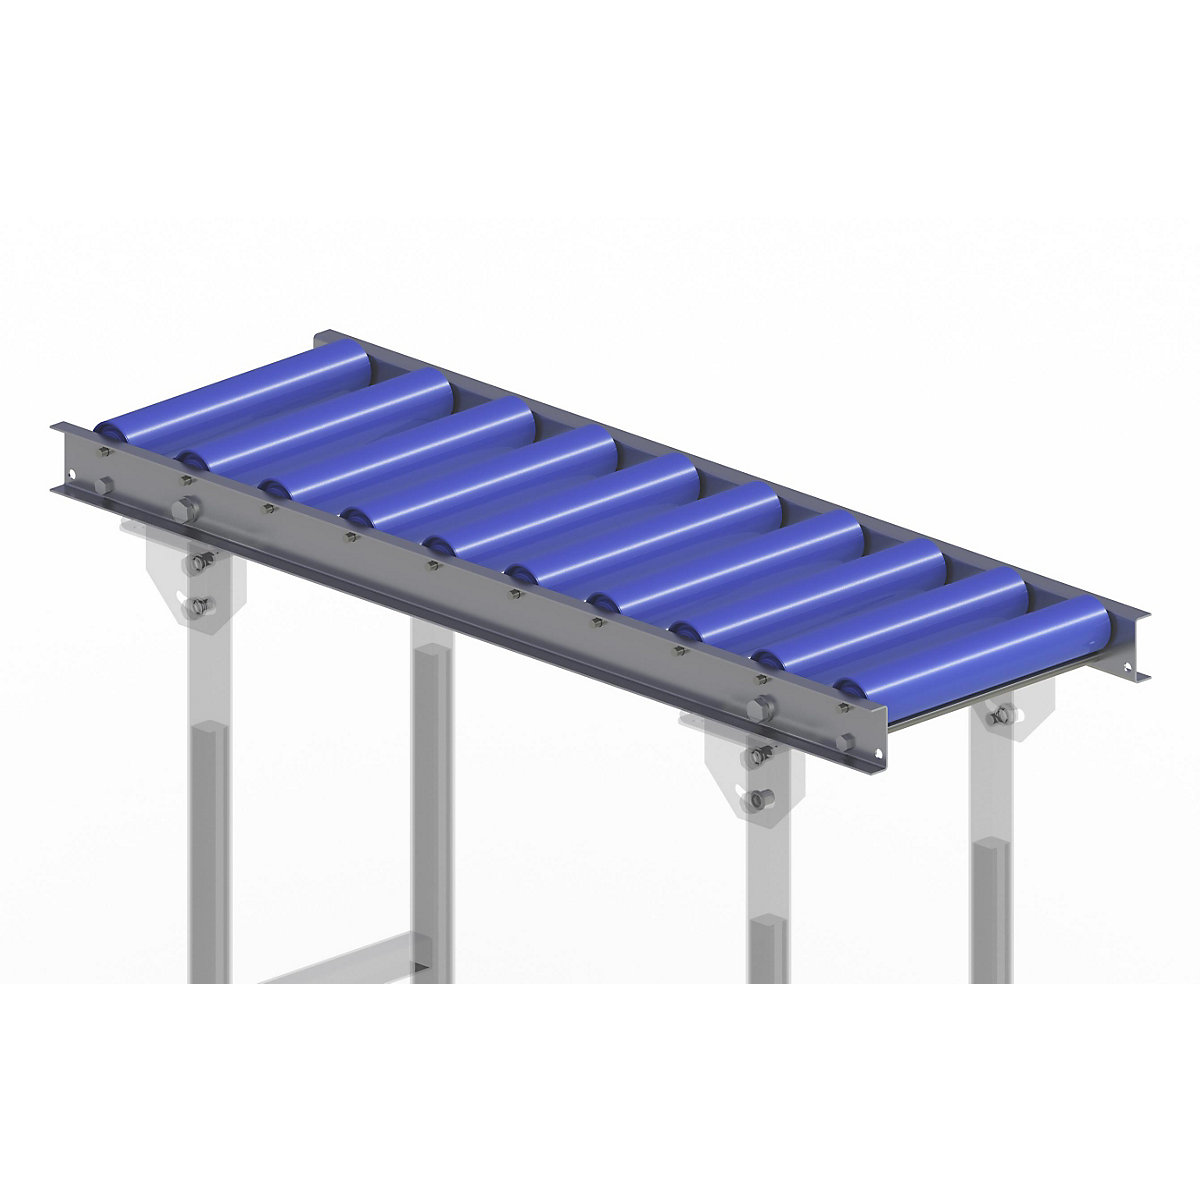 Gura – Light duty roller conveyor, steel frame with plastic rollers